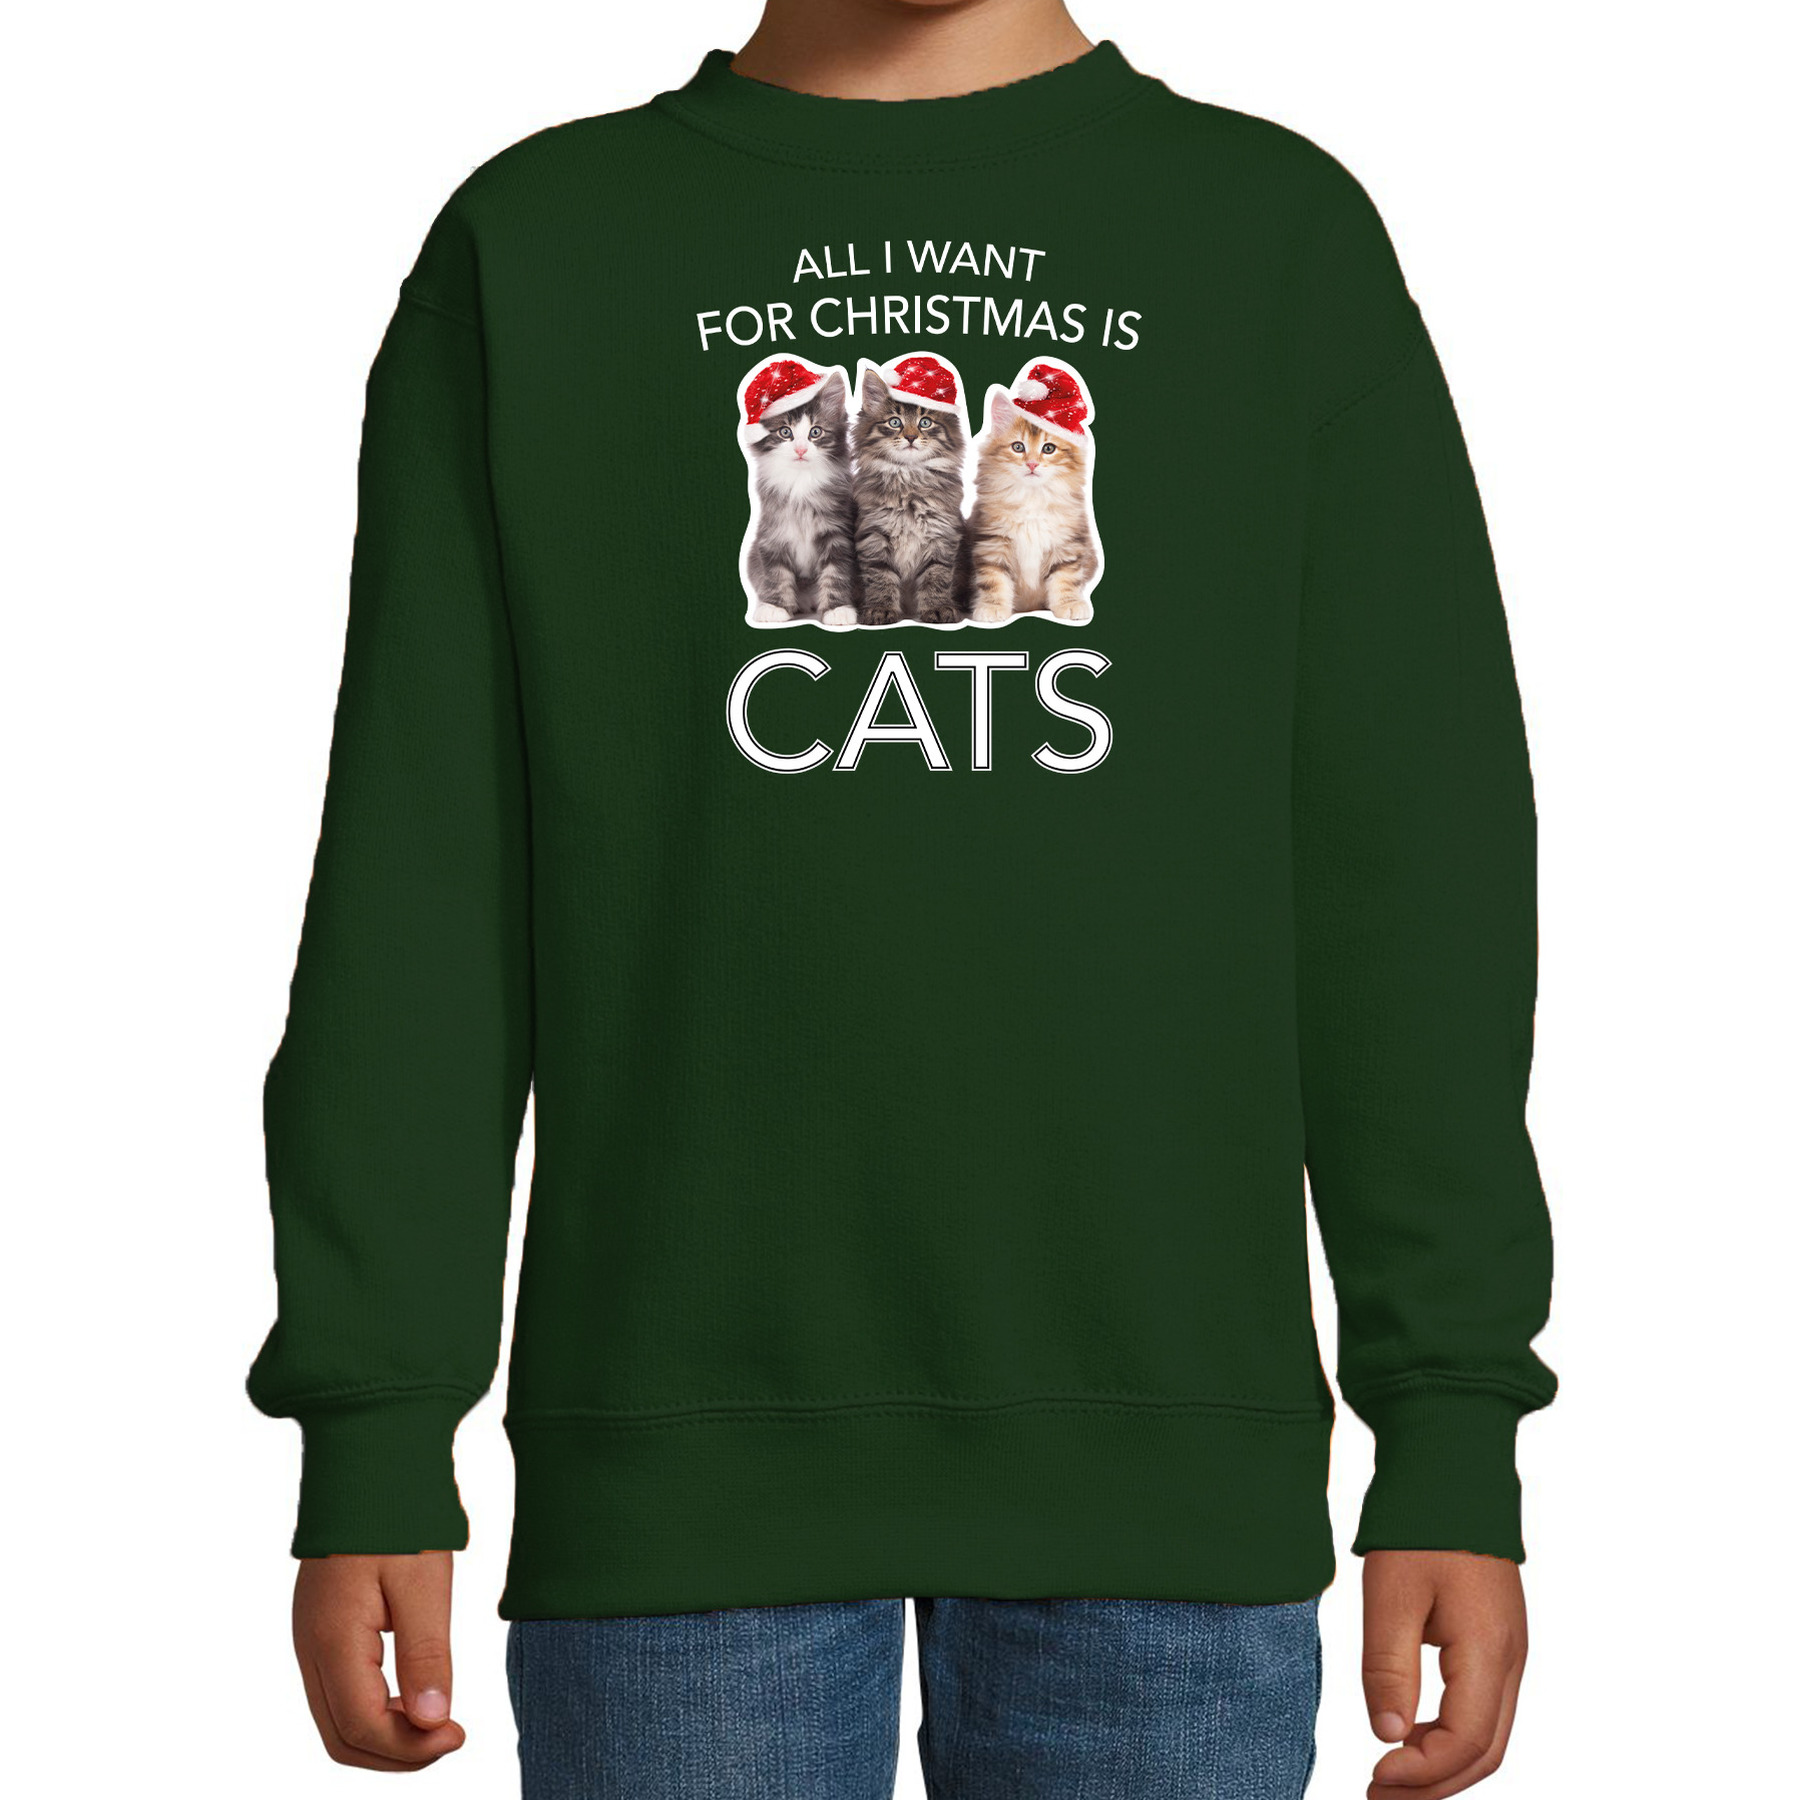 Bellatio Decorations Kitten Kerstsweater / Kerst trui All I want for Christmas is cats voor kinderen - Kerstkleding / Christmas outfit - Groen